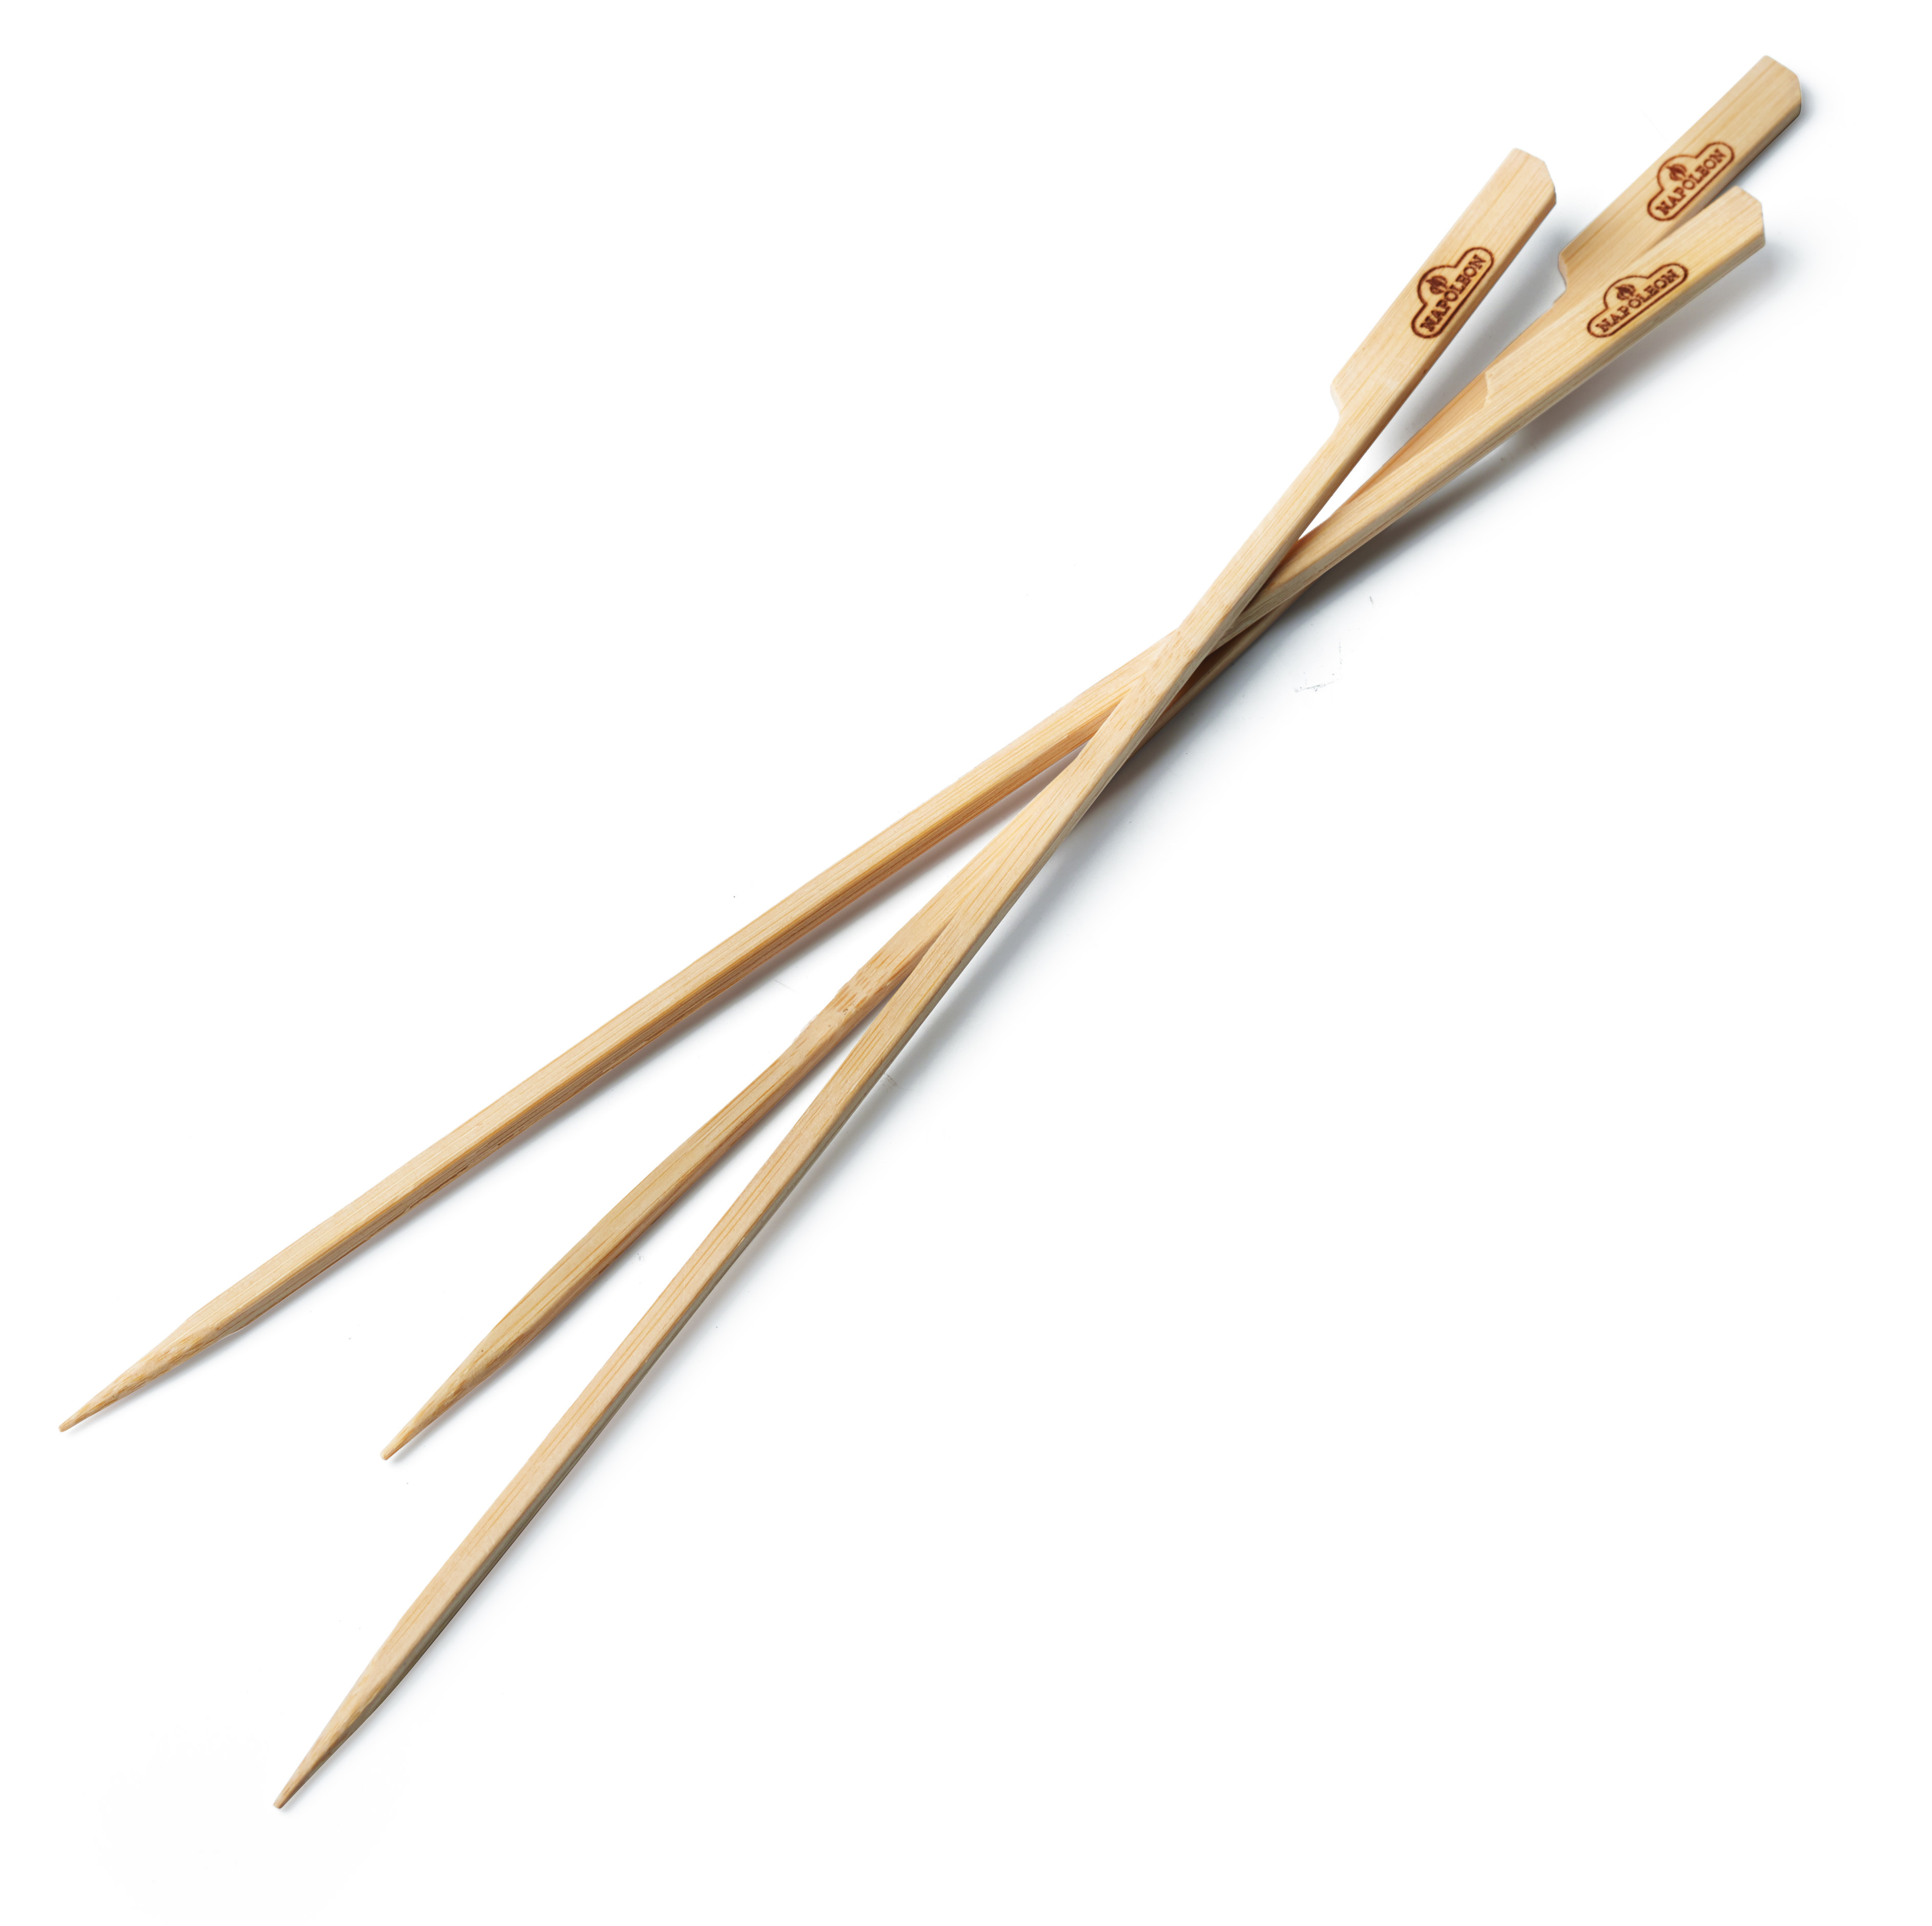 Spieße aus Bambus, 33,5 cm lang (30 Stk)